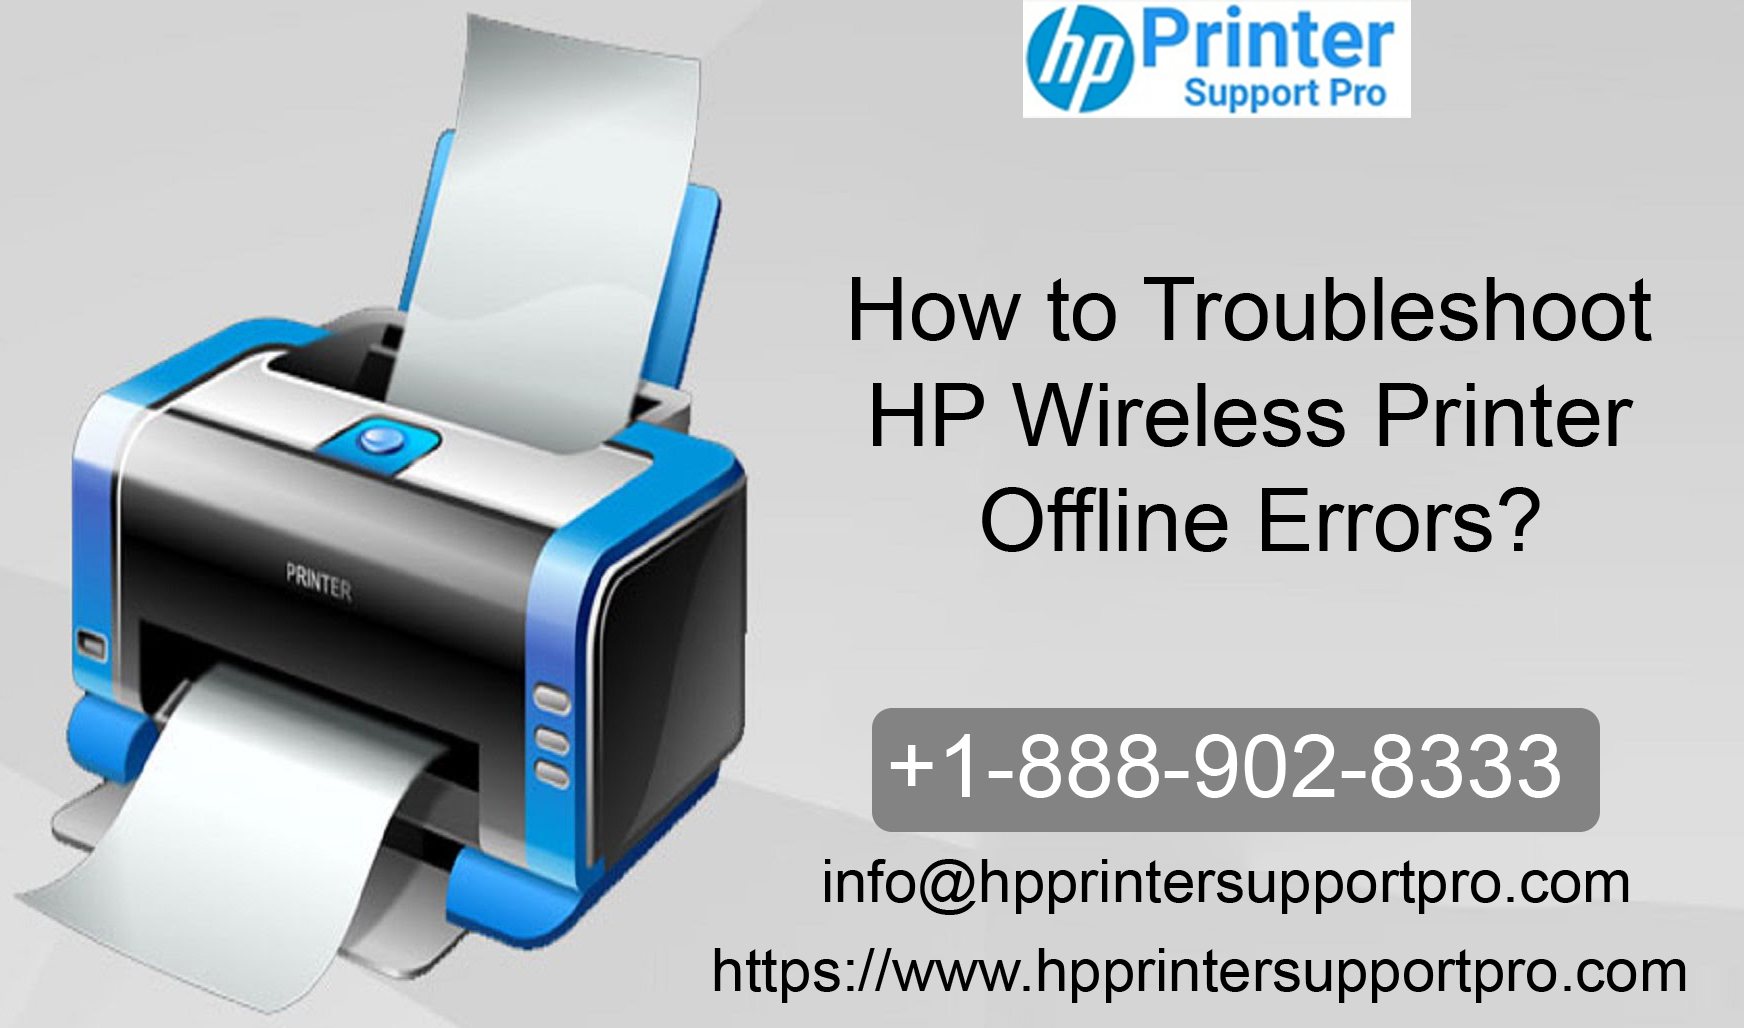 HP Wireless Printer Offline Errors